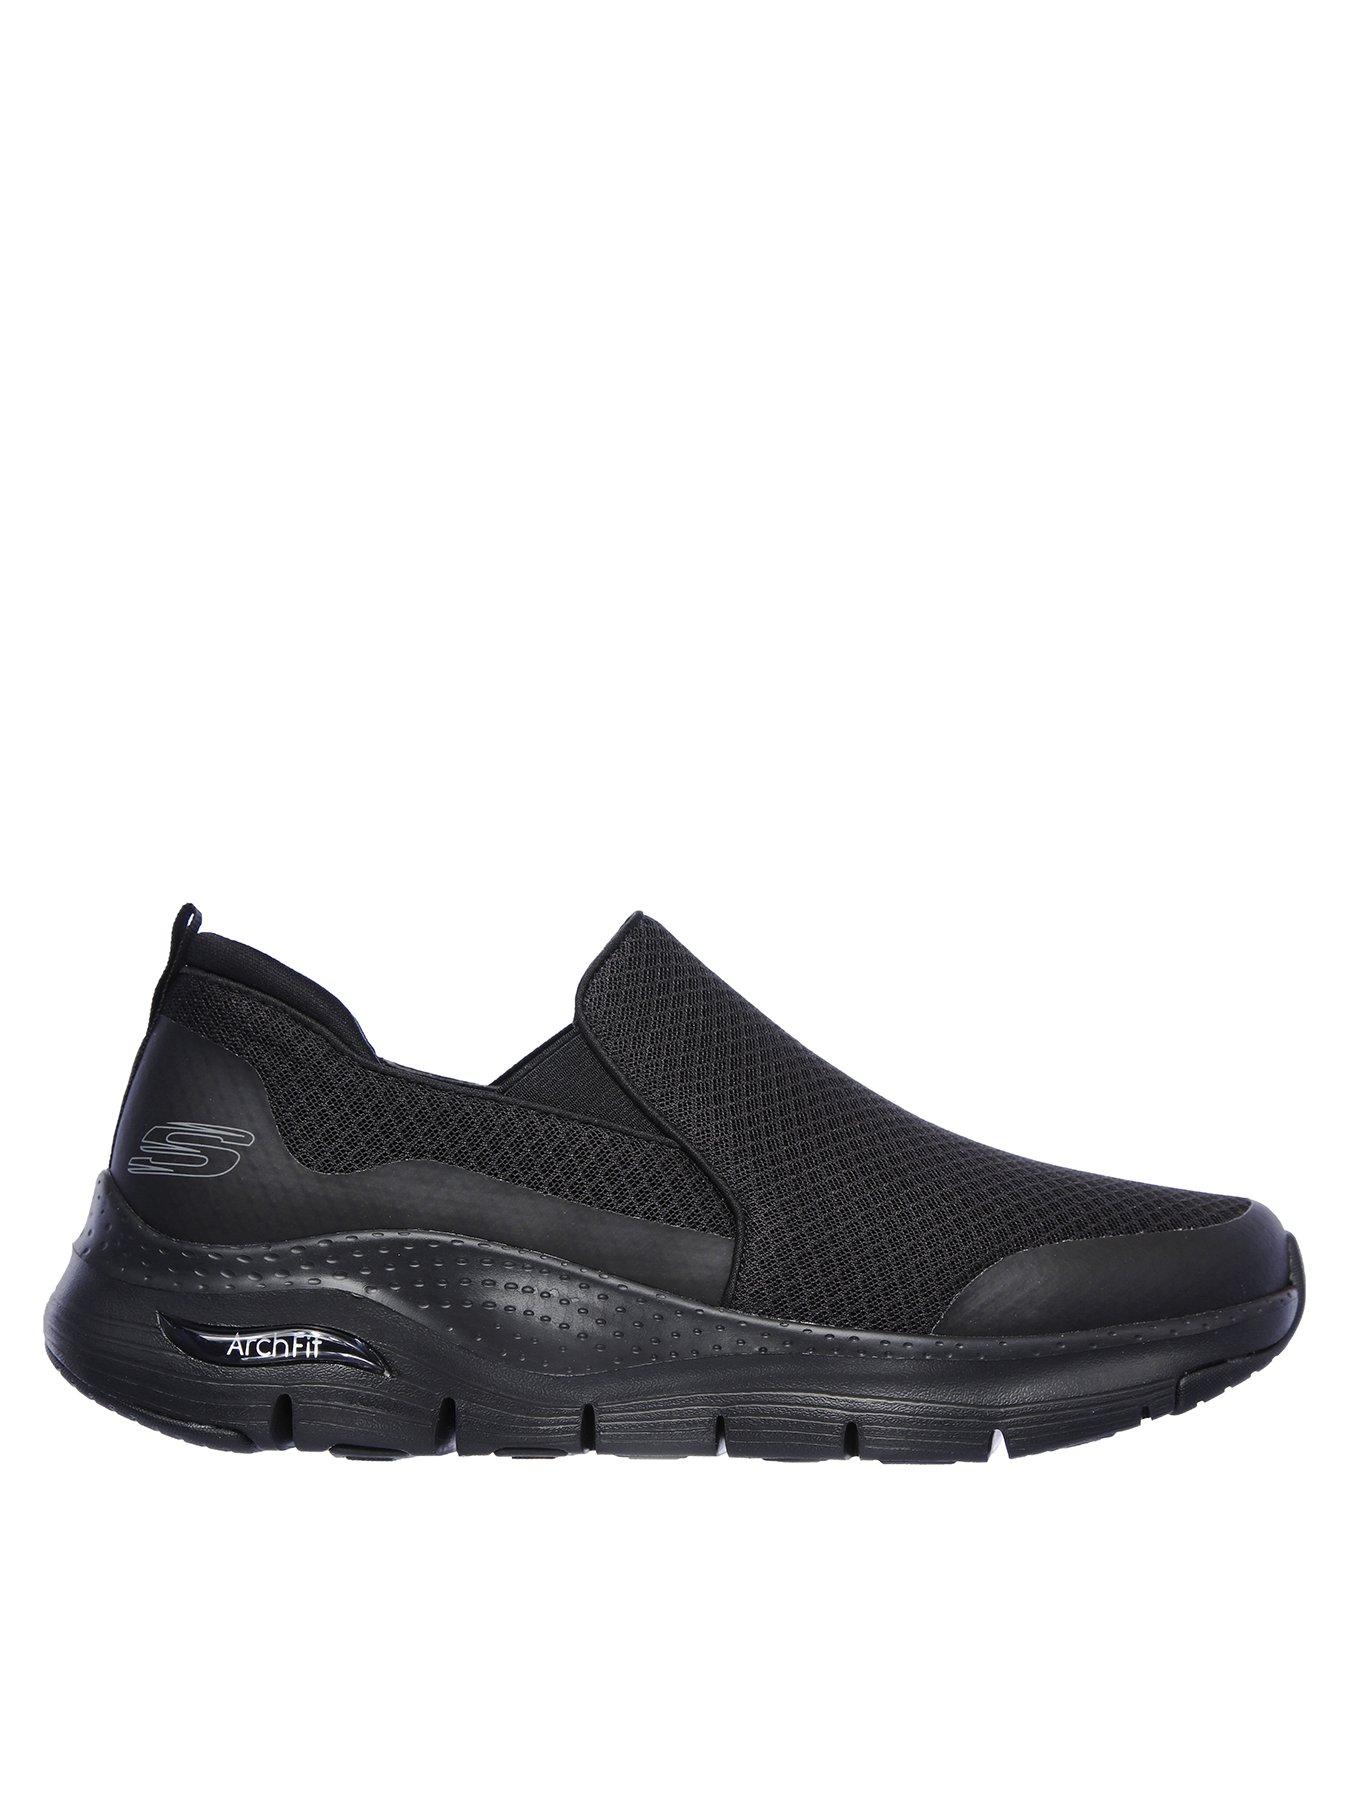 Skechers Arch Fit Slip On Shoe - Black/White | very.co.uk